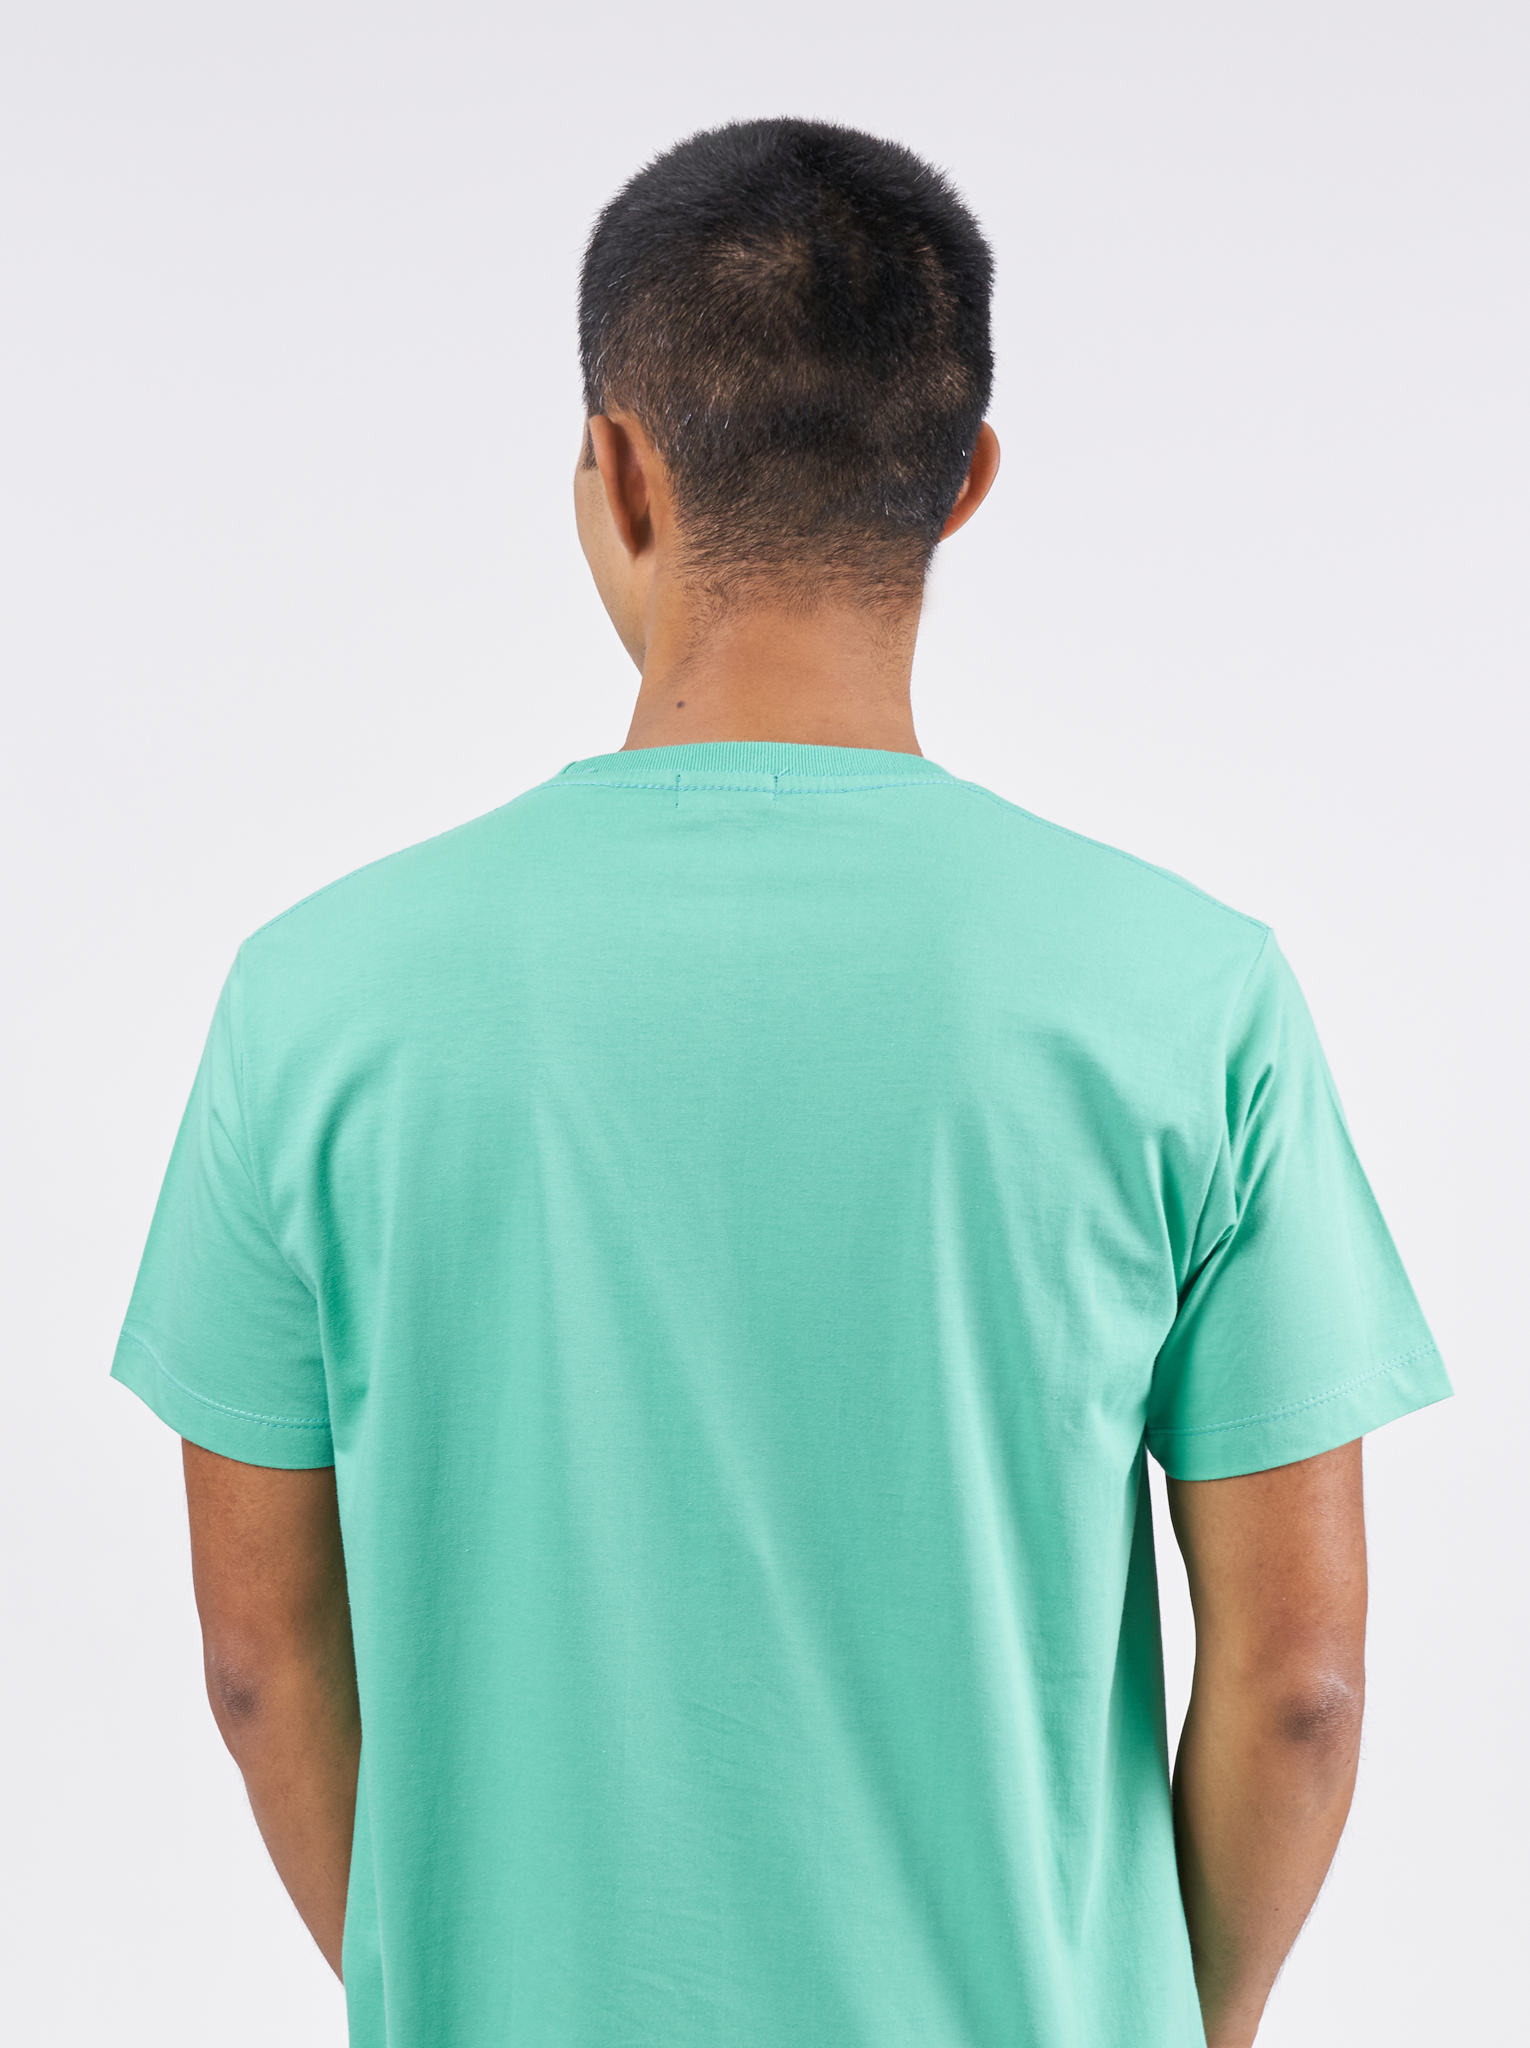 T-Shirt เสื้อยืด (Mint Green, สีเขียวมิ้นท์)(Unisex)